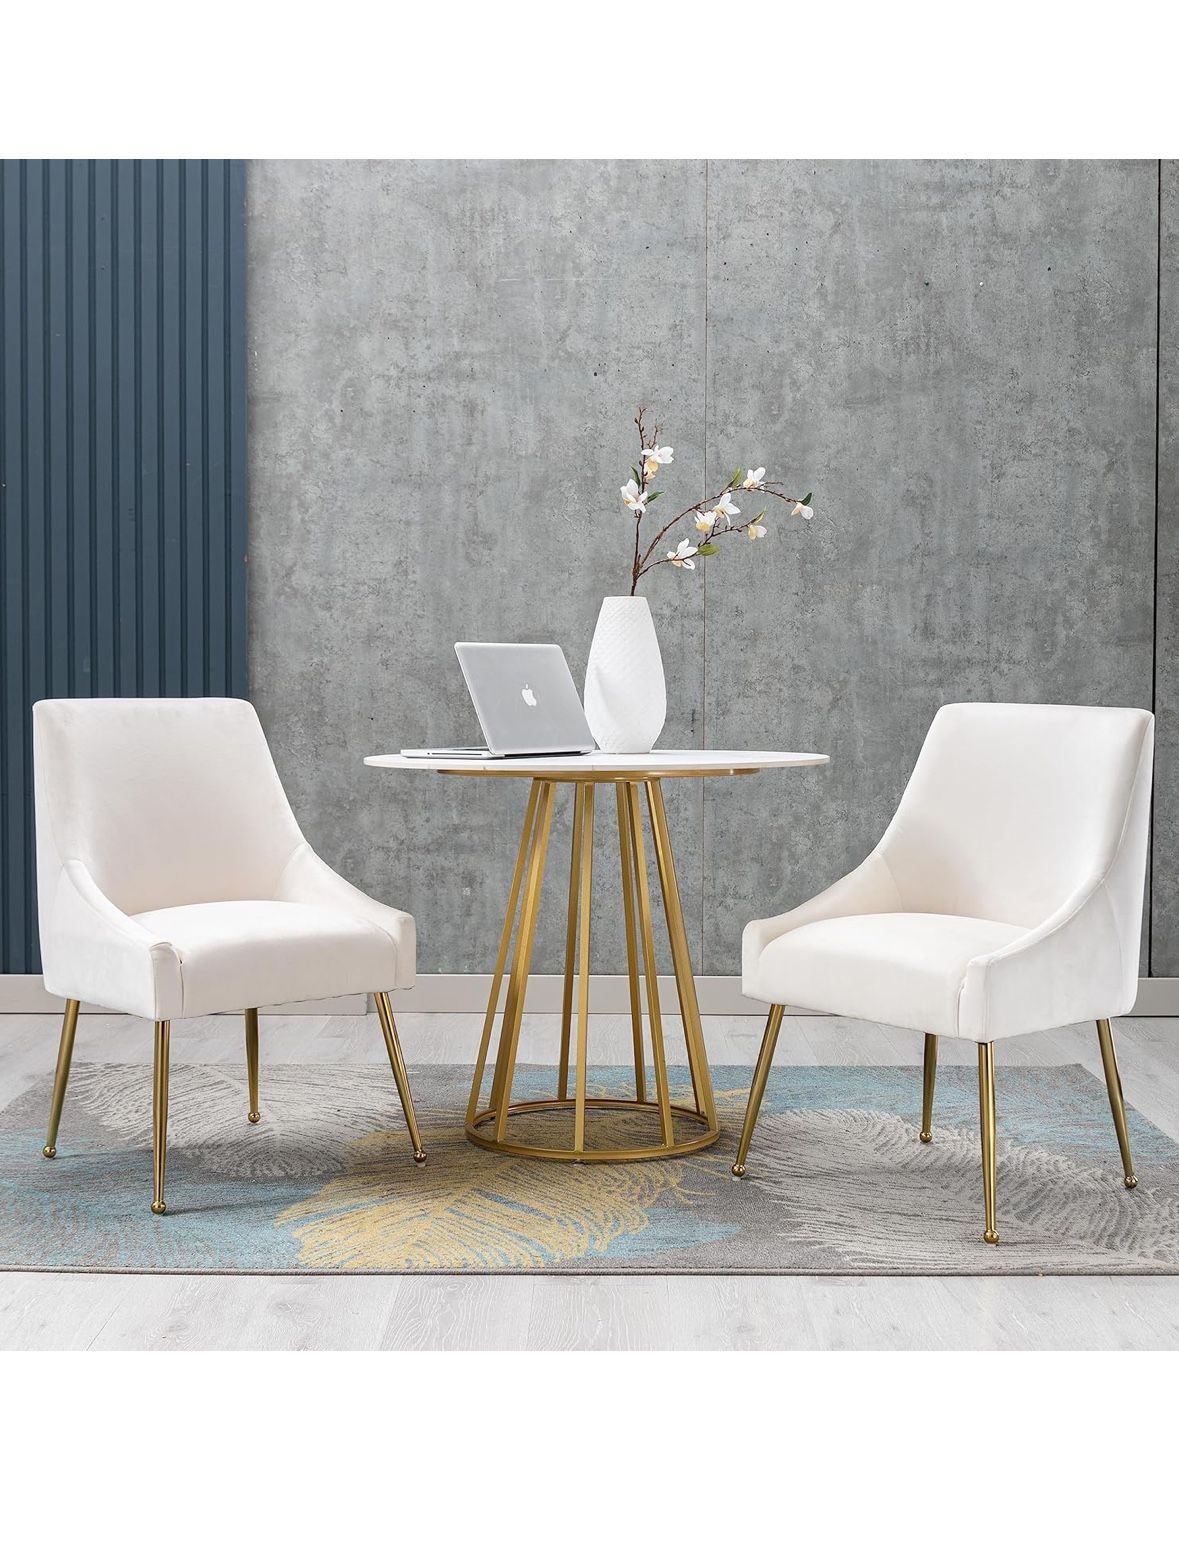 Modern Velvet Accent Chair, Thick Sponge Upholstered Dining Chair with Golden Legs for Dining Room/Bedroom/Living Room/Office Set of 2(Beige